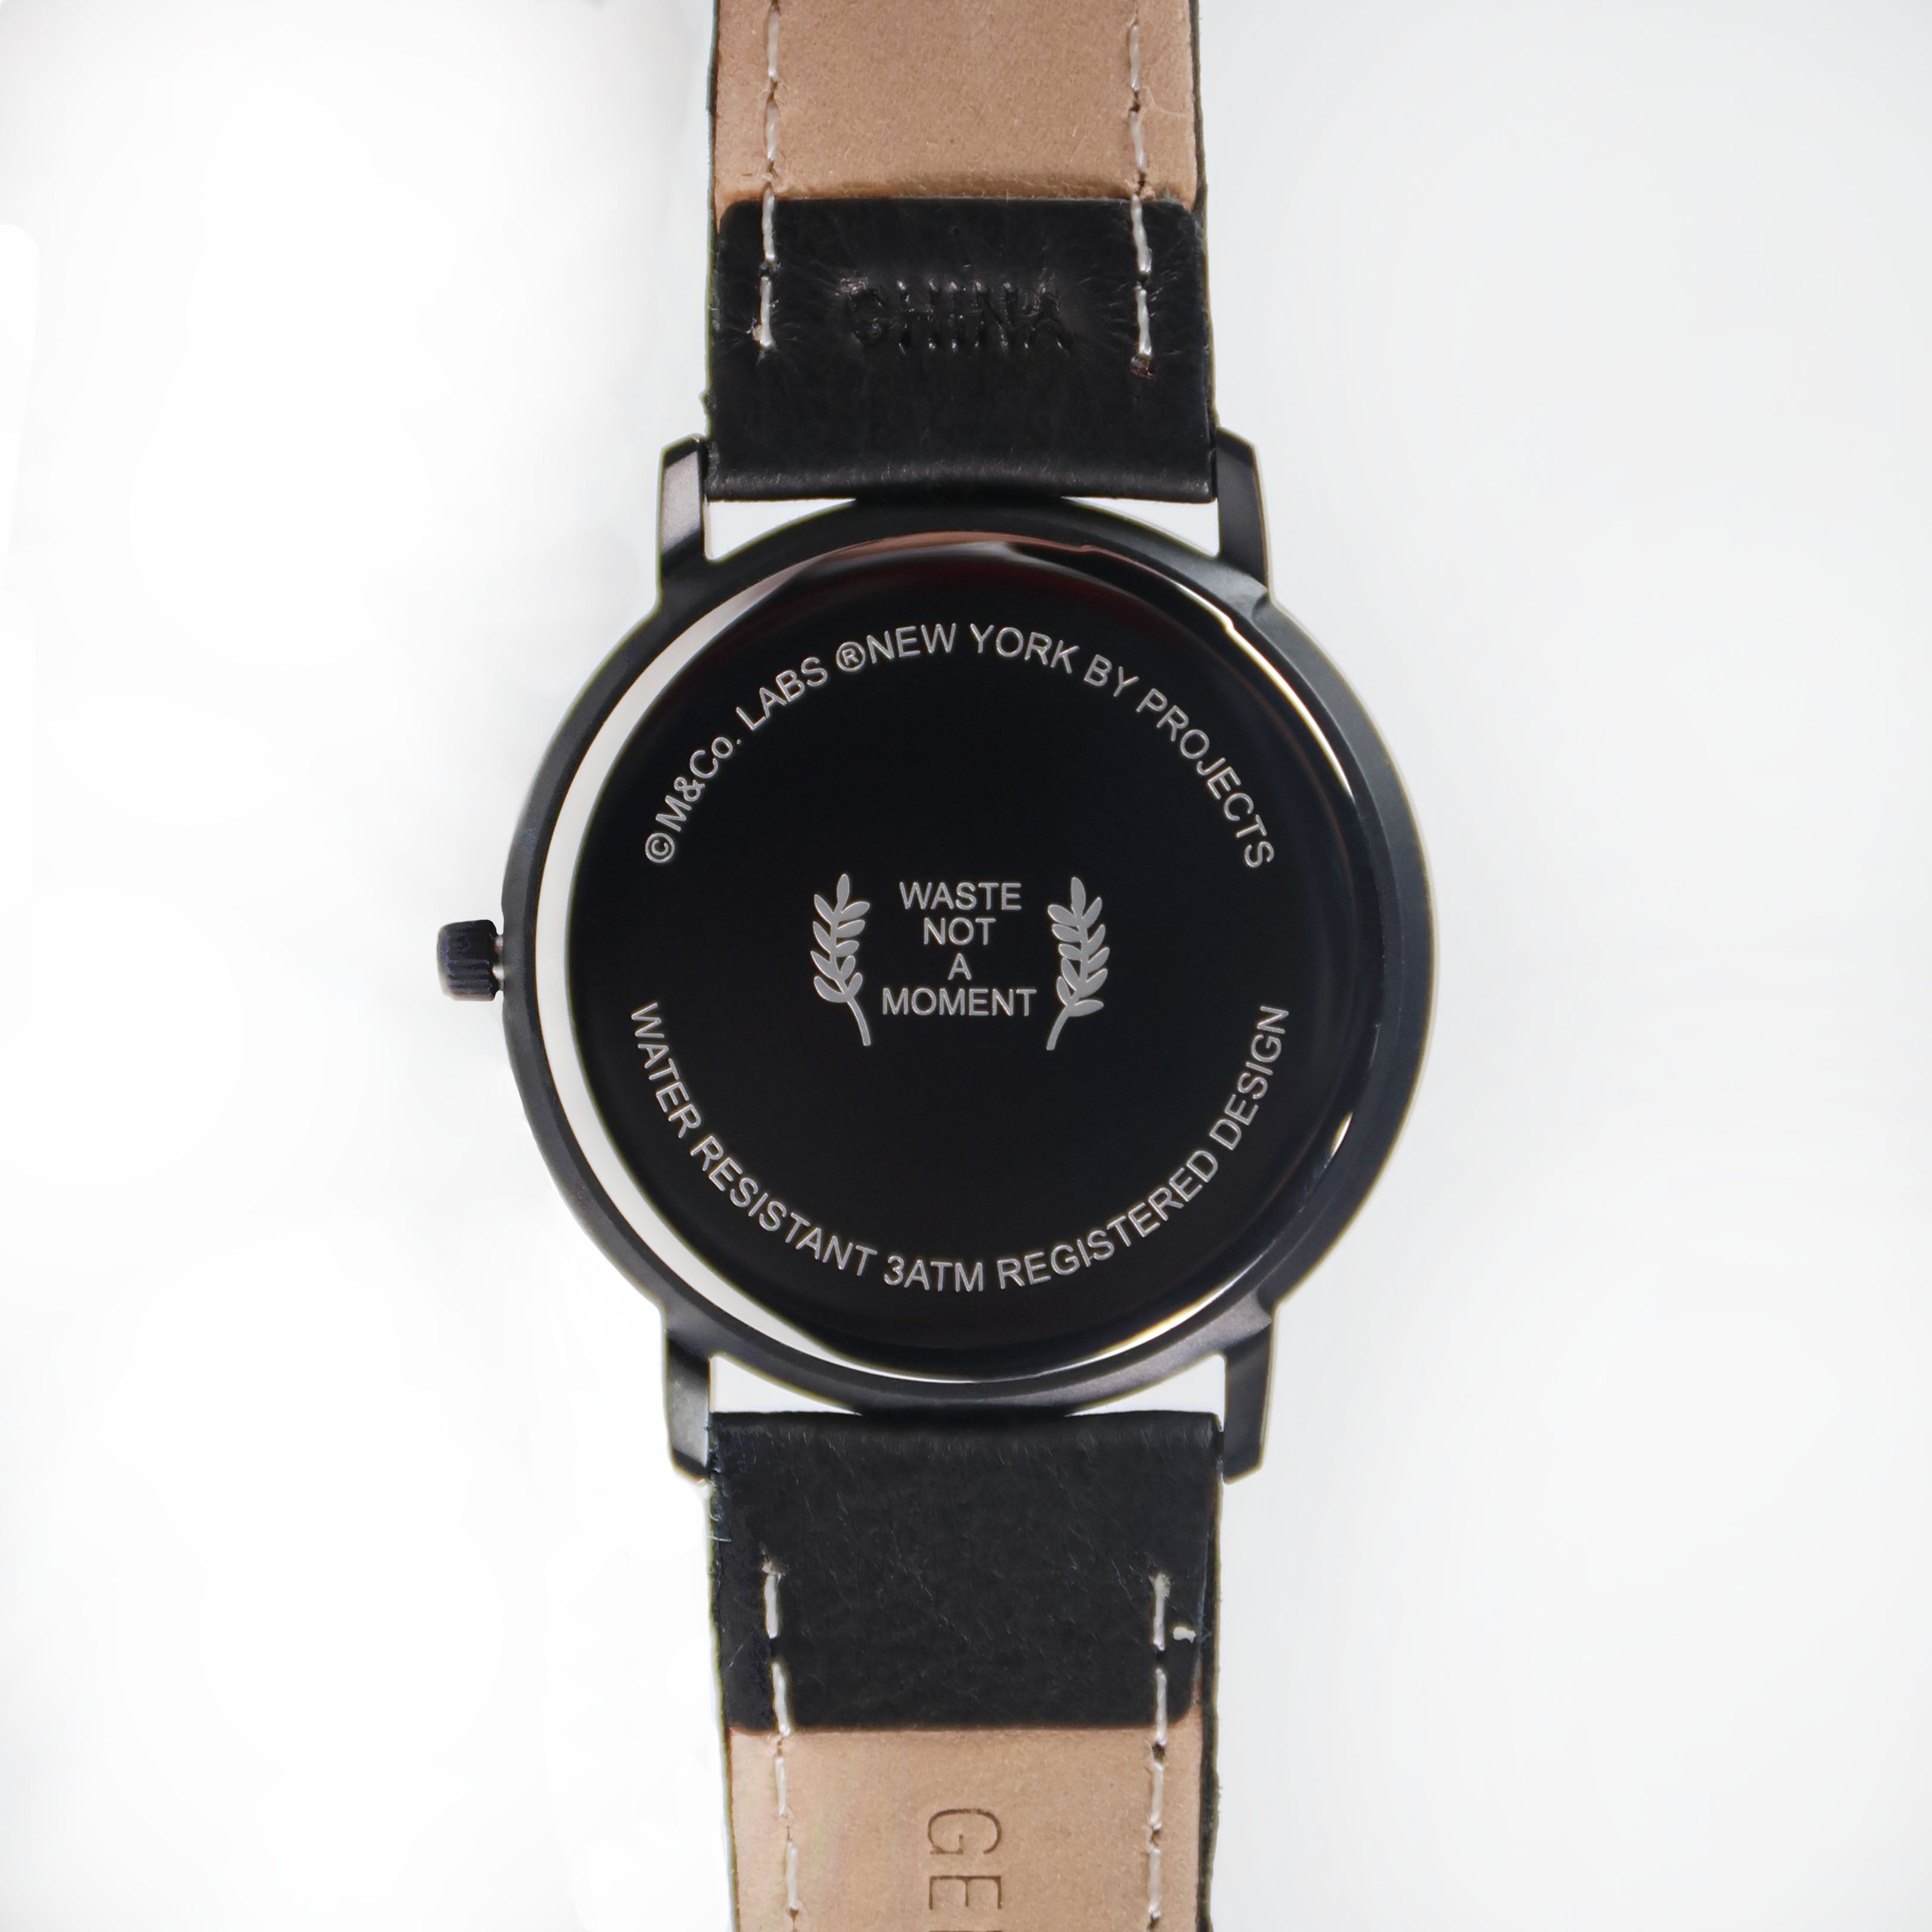 Tapferkeit Watches - Affordable Bauhaus Inspired Watches by Tapferkeit  Watches — Kickstarter